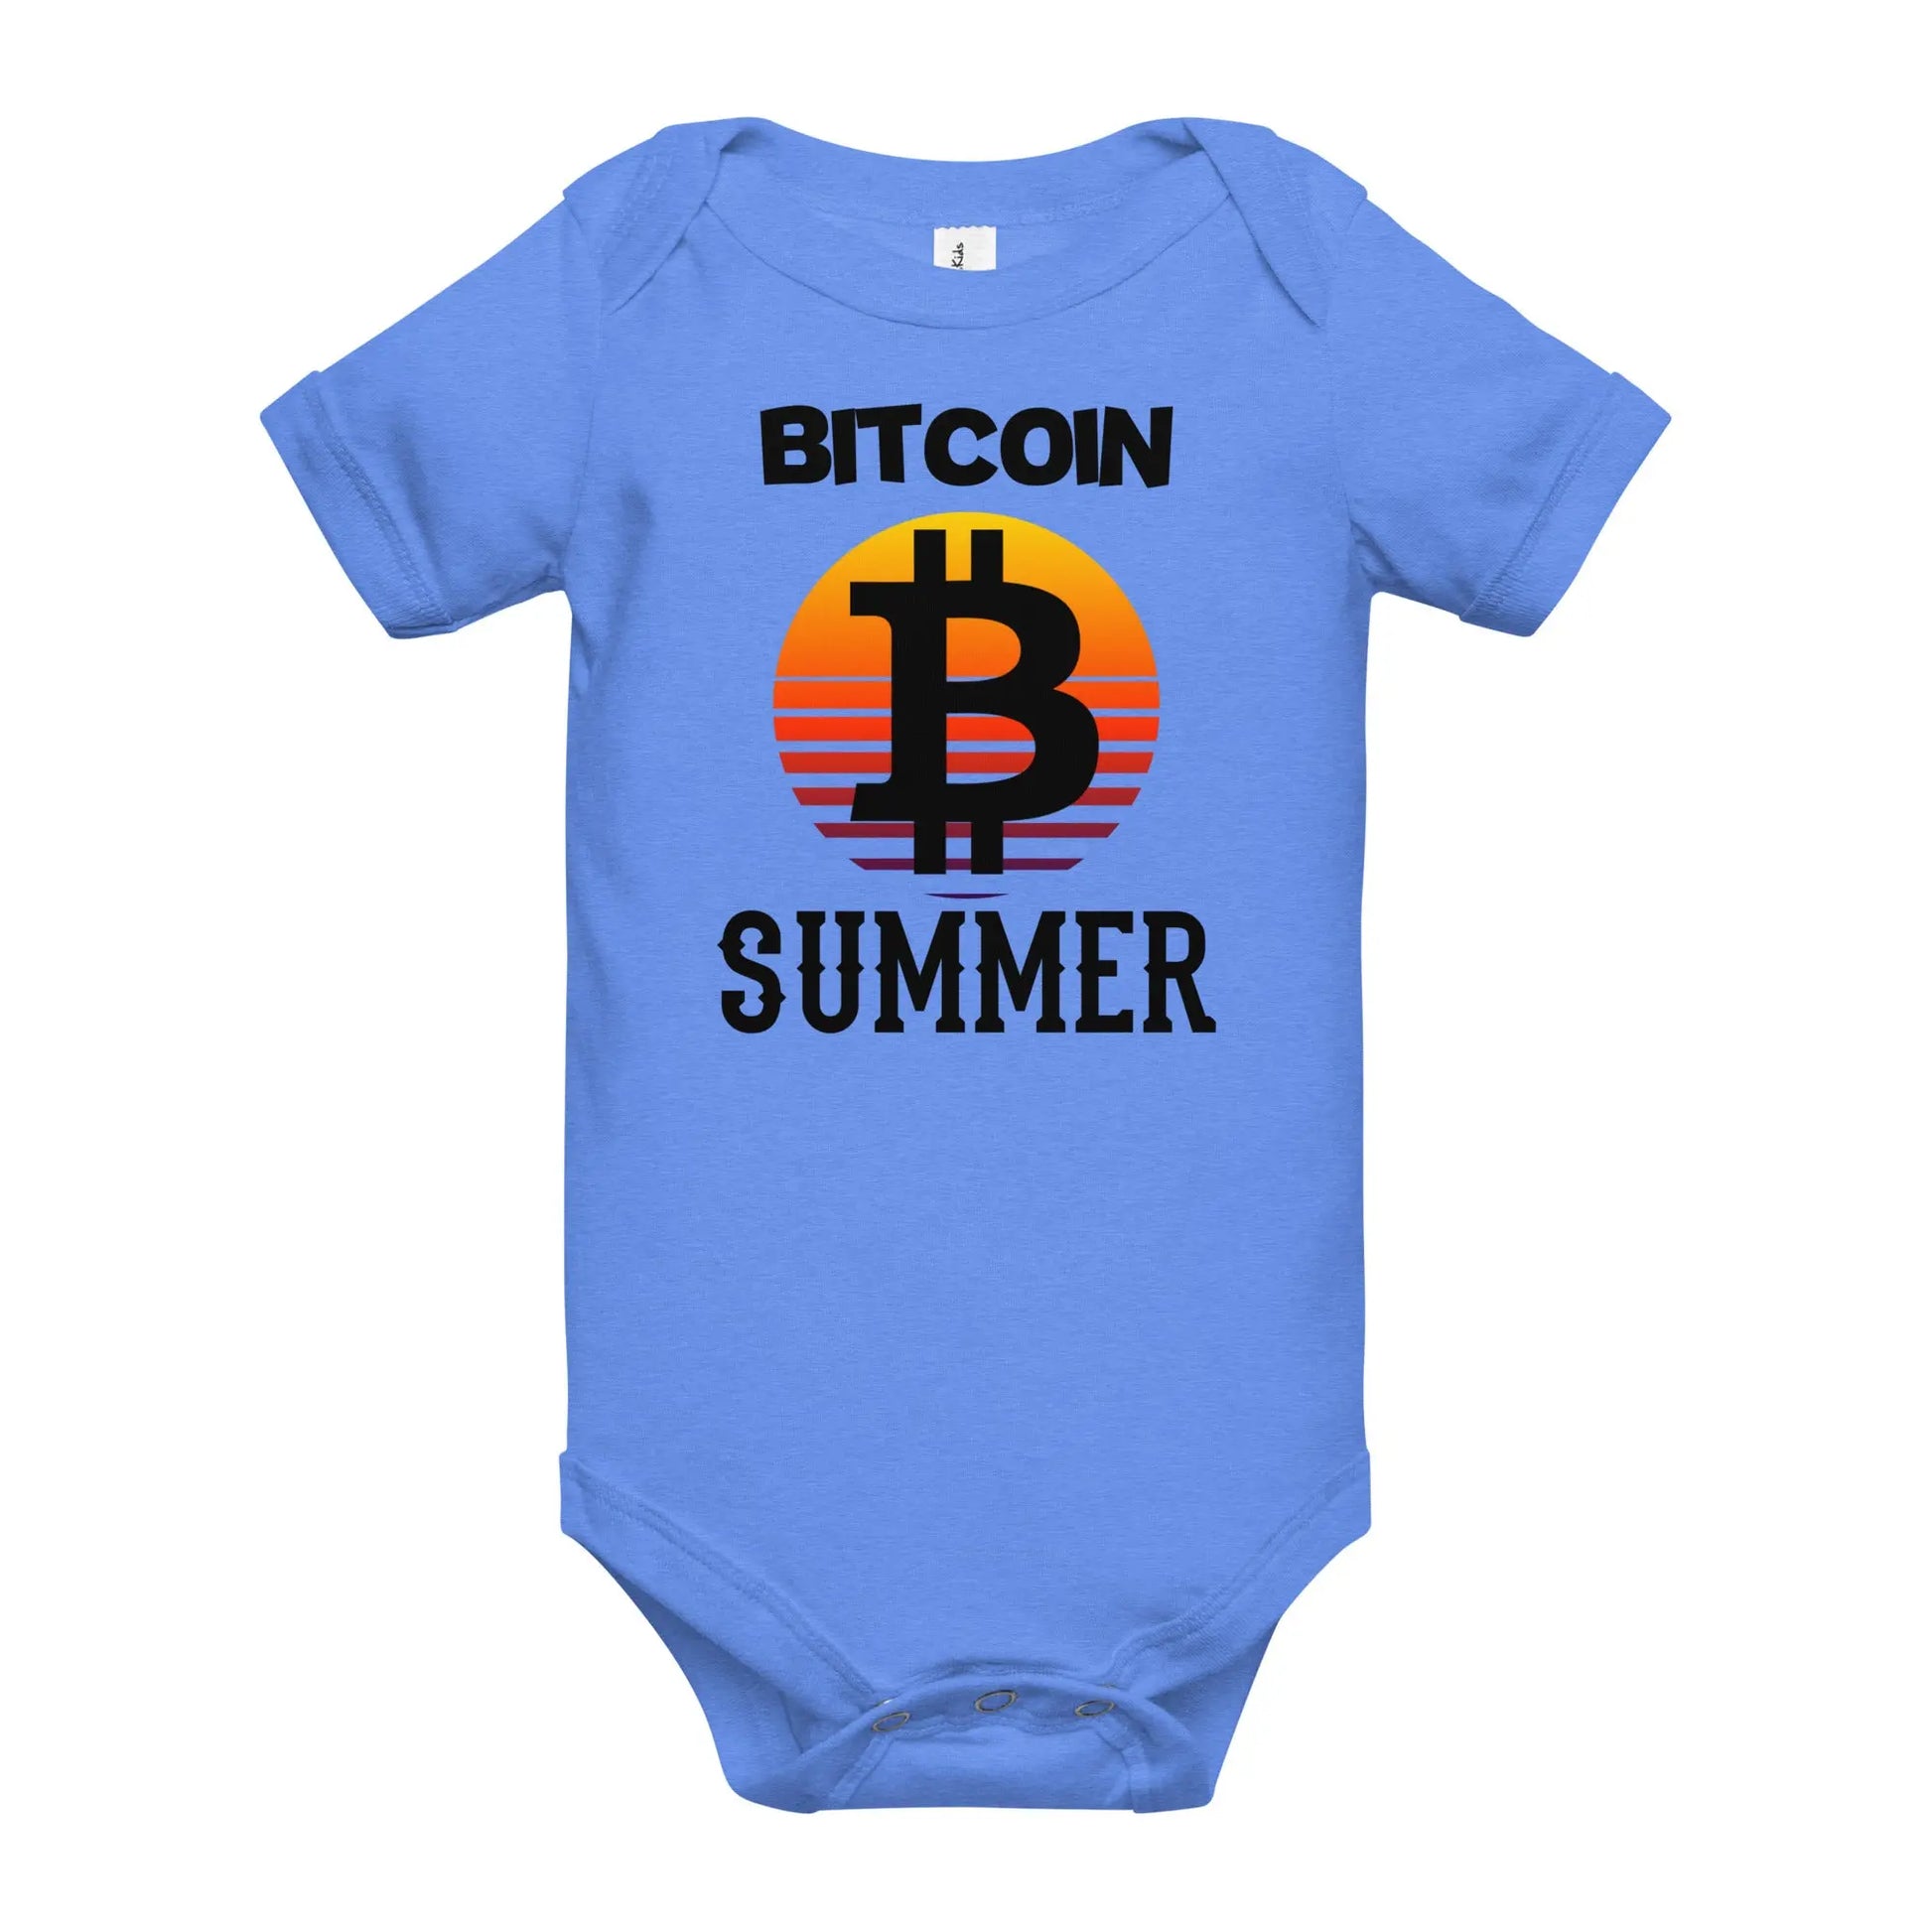 Bitcoin Summer - Baby Bitcoin Body Suit Blue Color